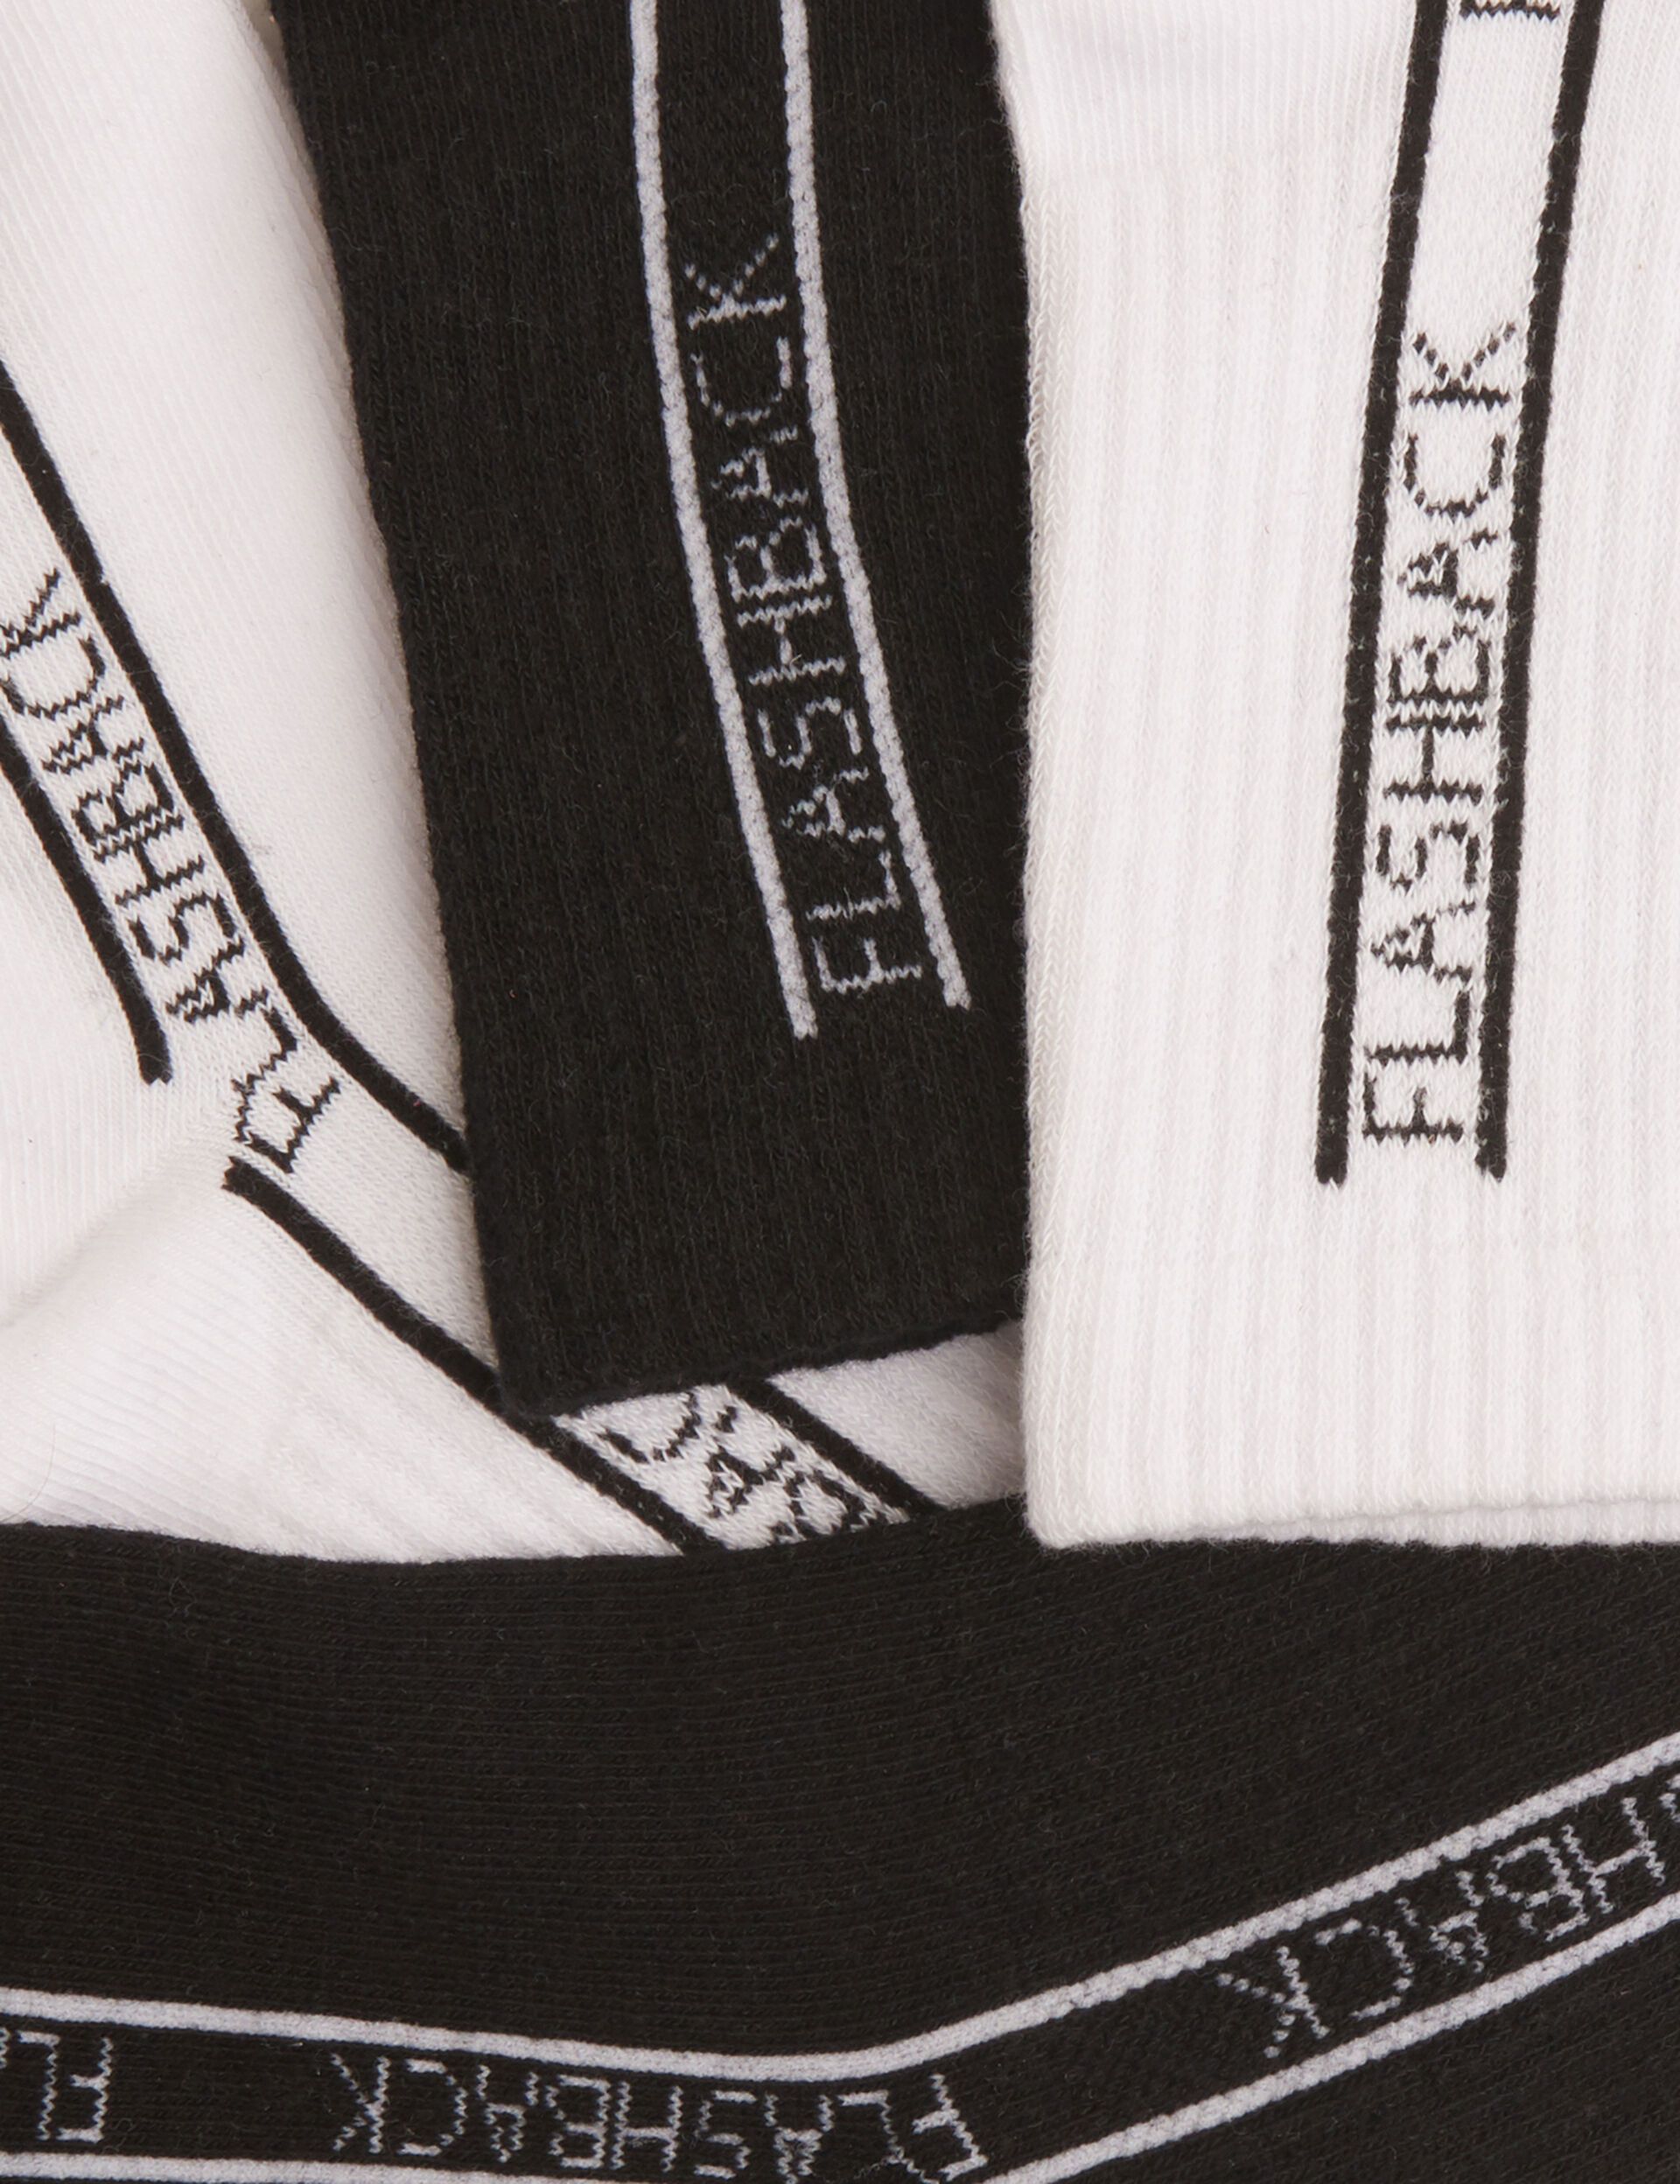 Text design socks